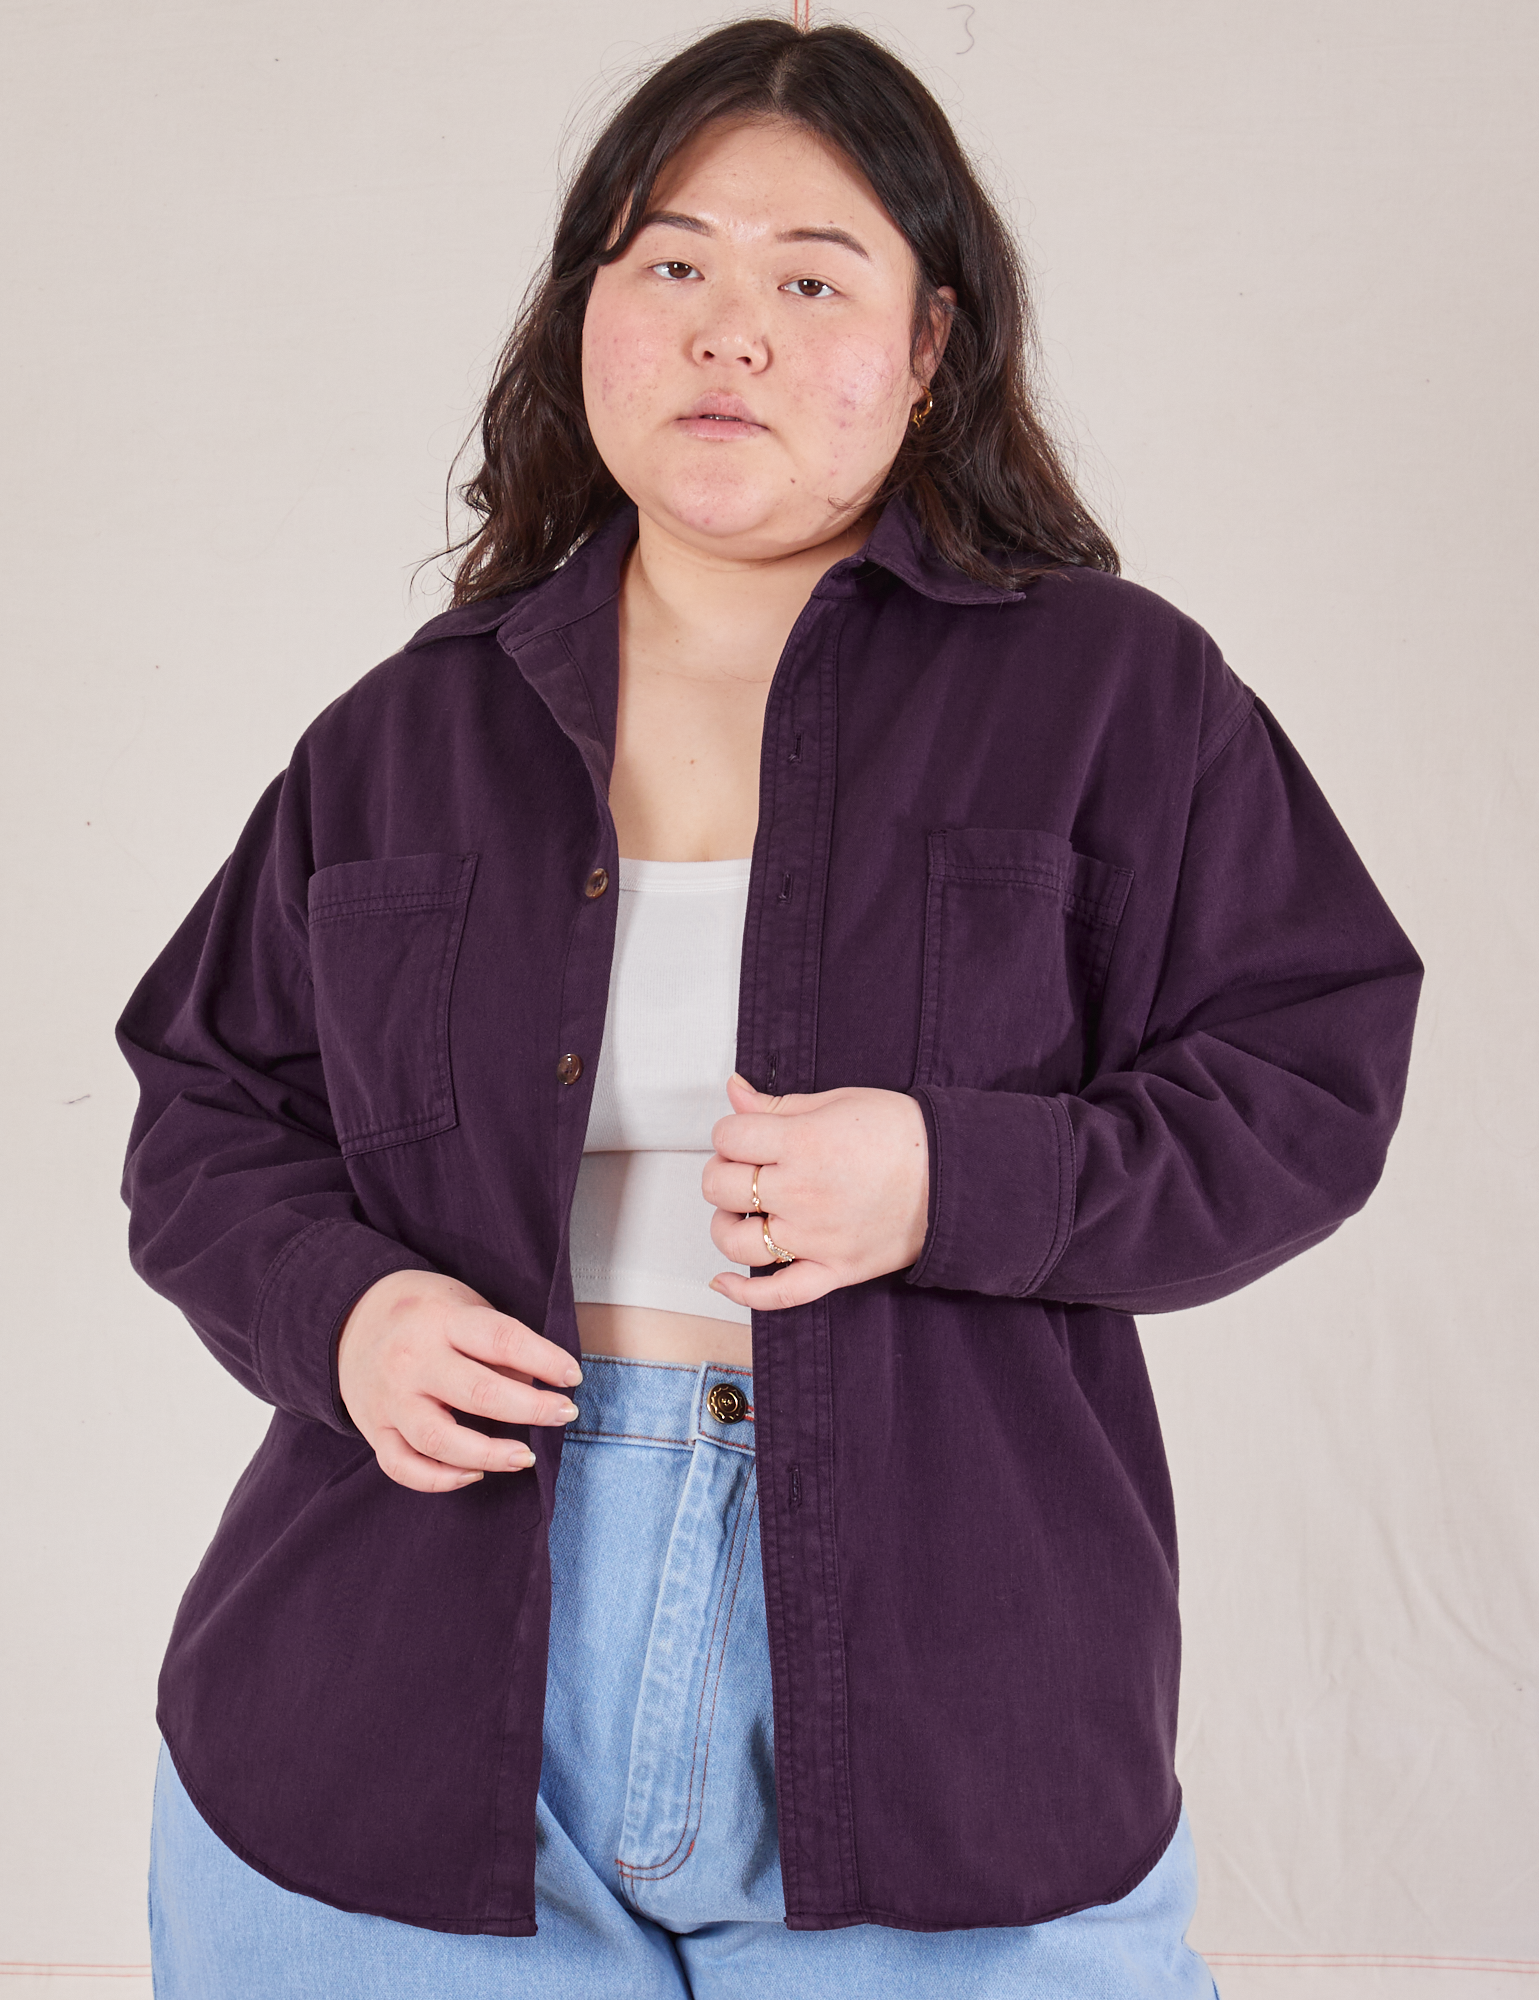 Ashley is wearing Oversize Overshirt in Nebula Purple